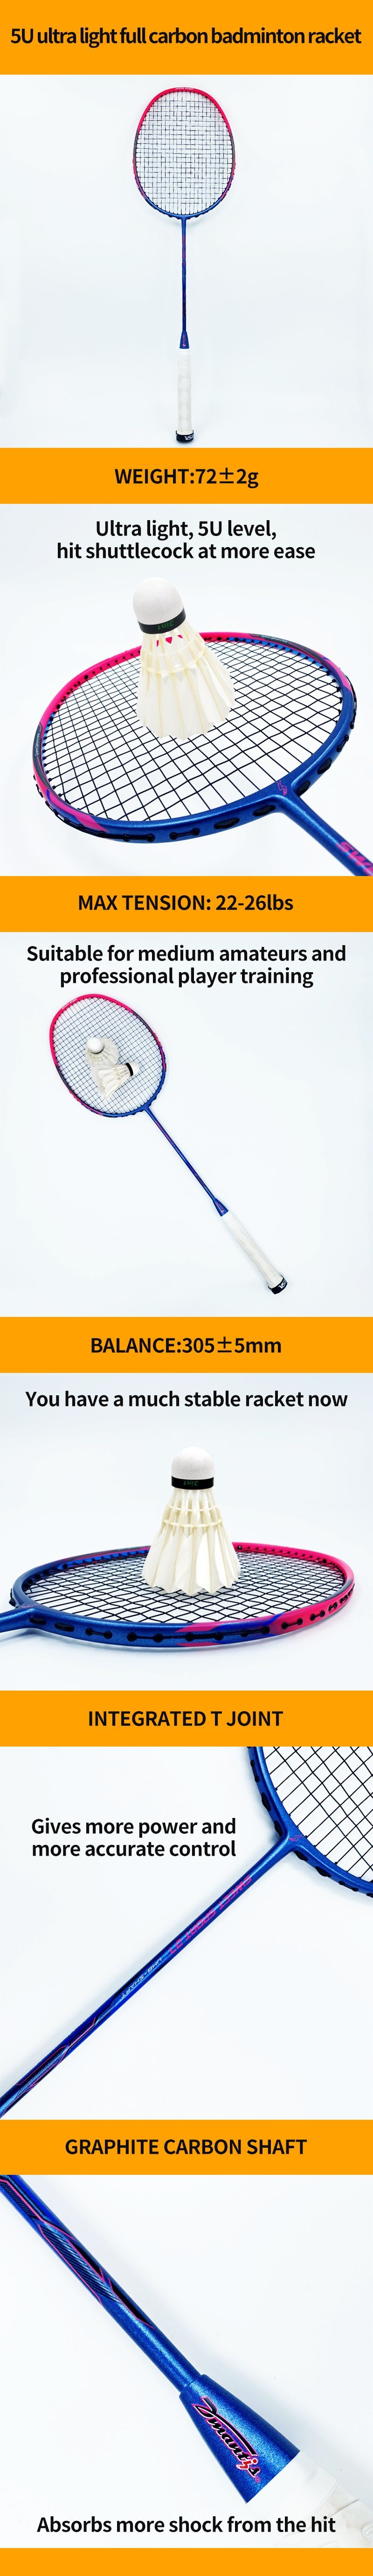 Wholesaler 100% Full Carbon Fiber Badminton Racket OEM Customized Color and Design